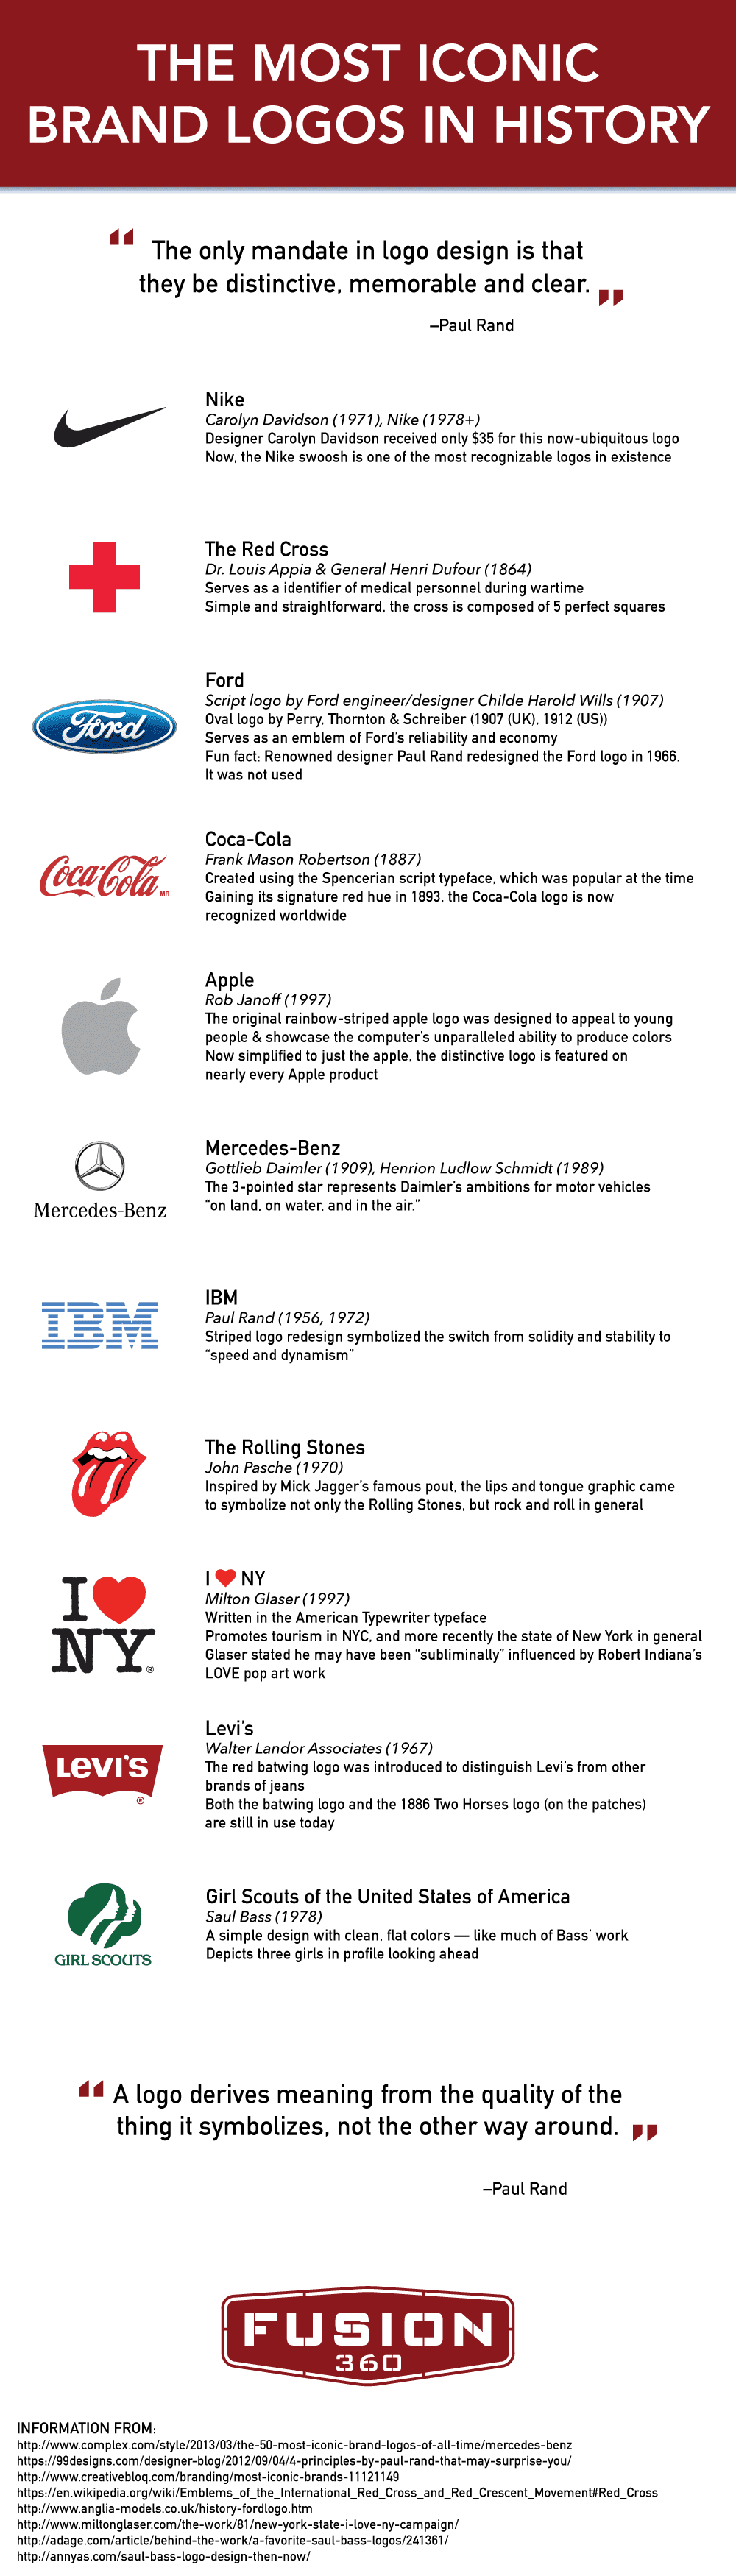 Iconic-Brand-Logos